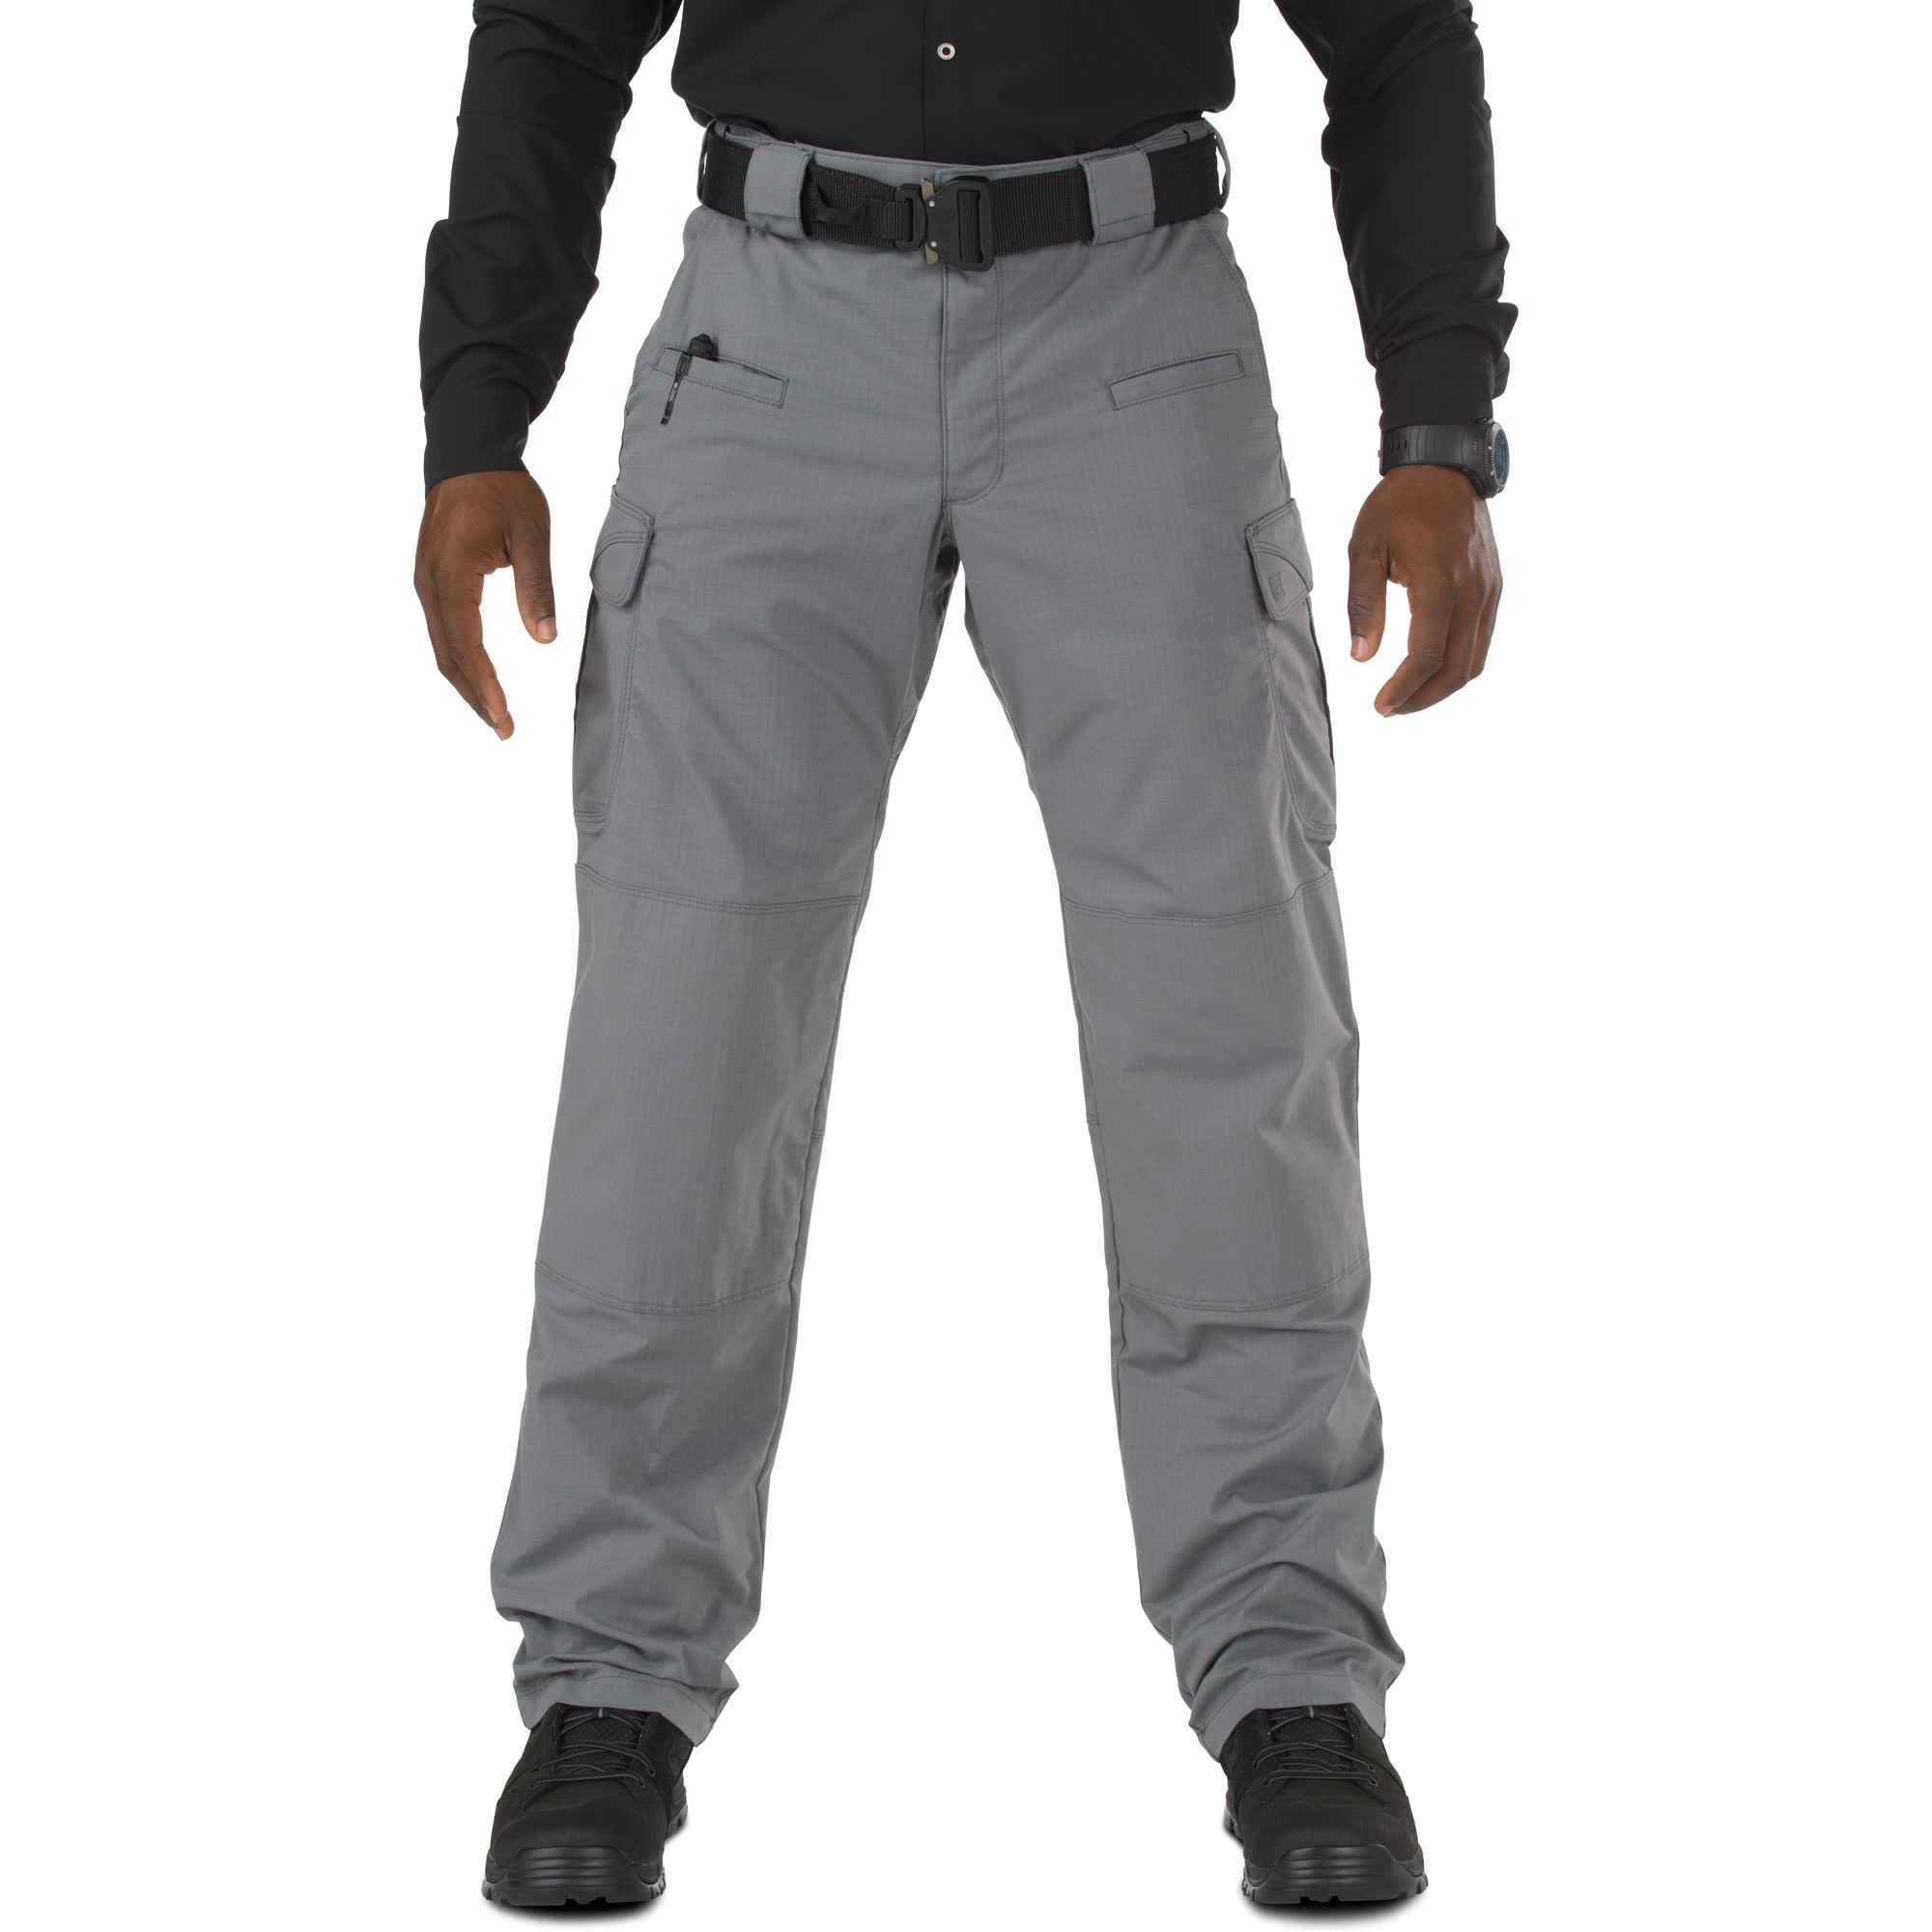 5.11 Tactical Stryke Pants with Flex-Tac - Storm Pants 5.11 Tactical 28 30 Tactical Gear Supplier Tactical Distributors Australia